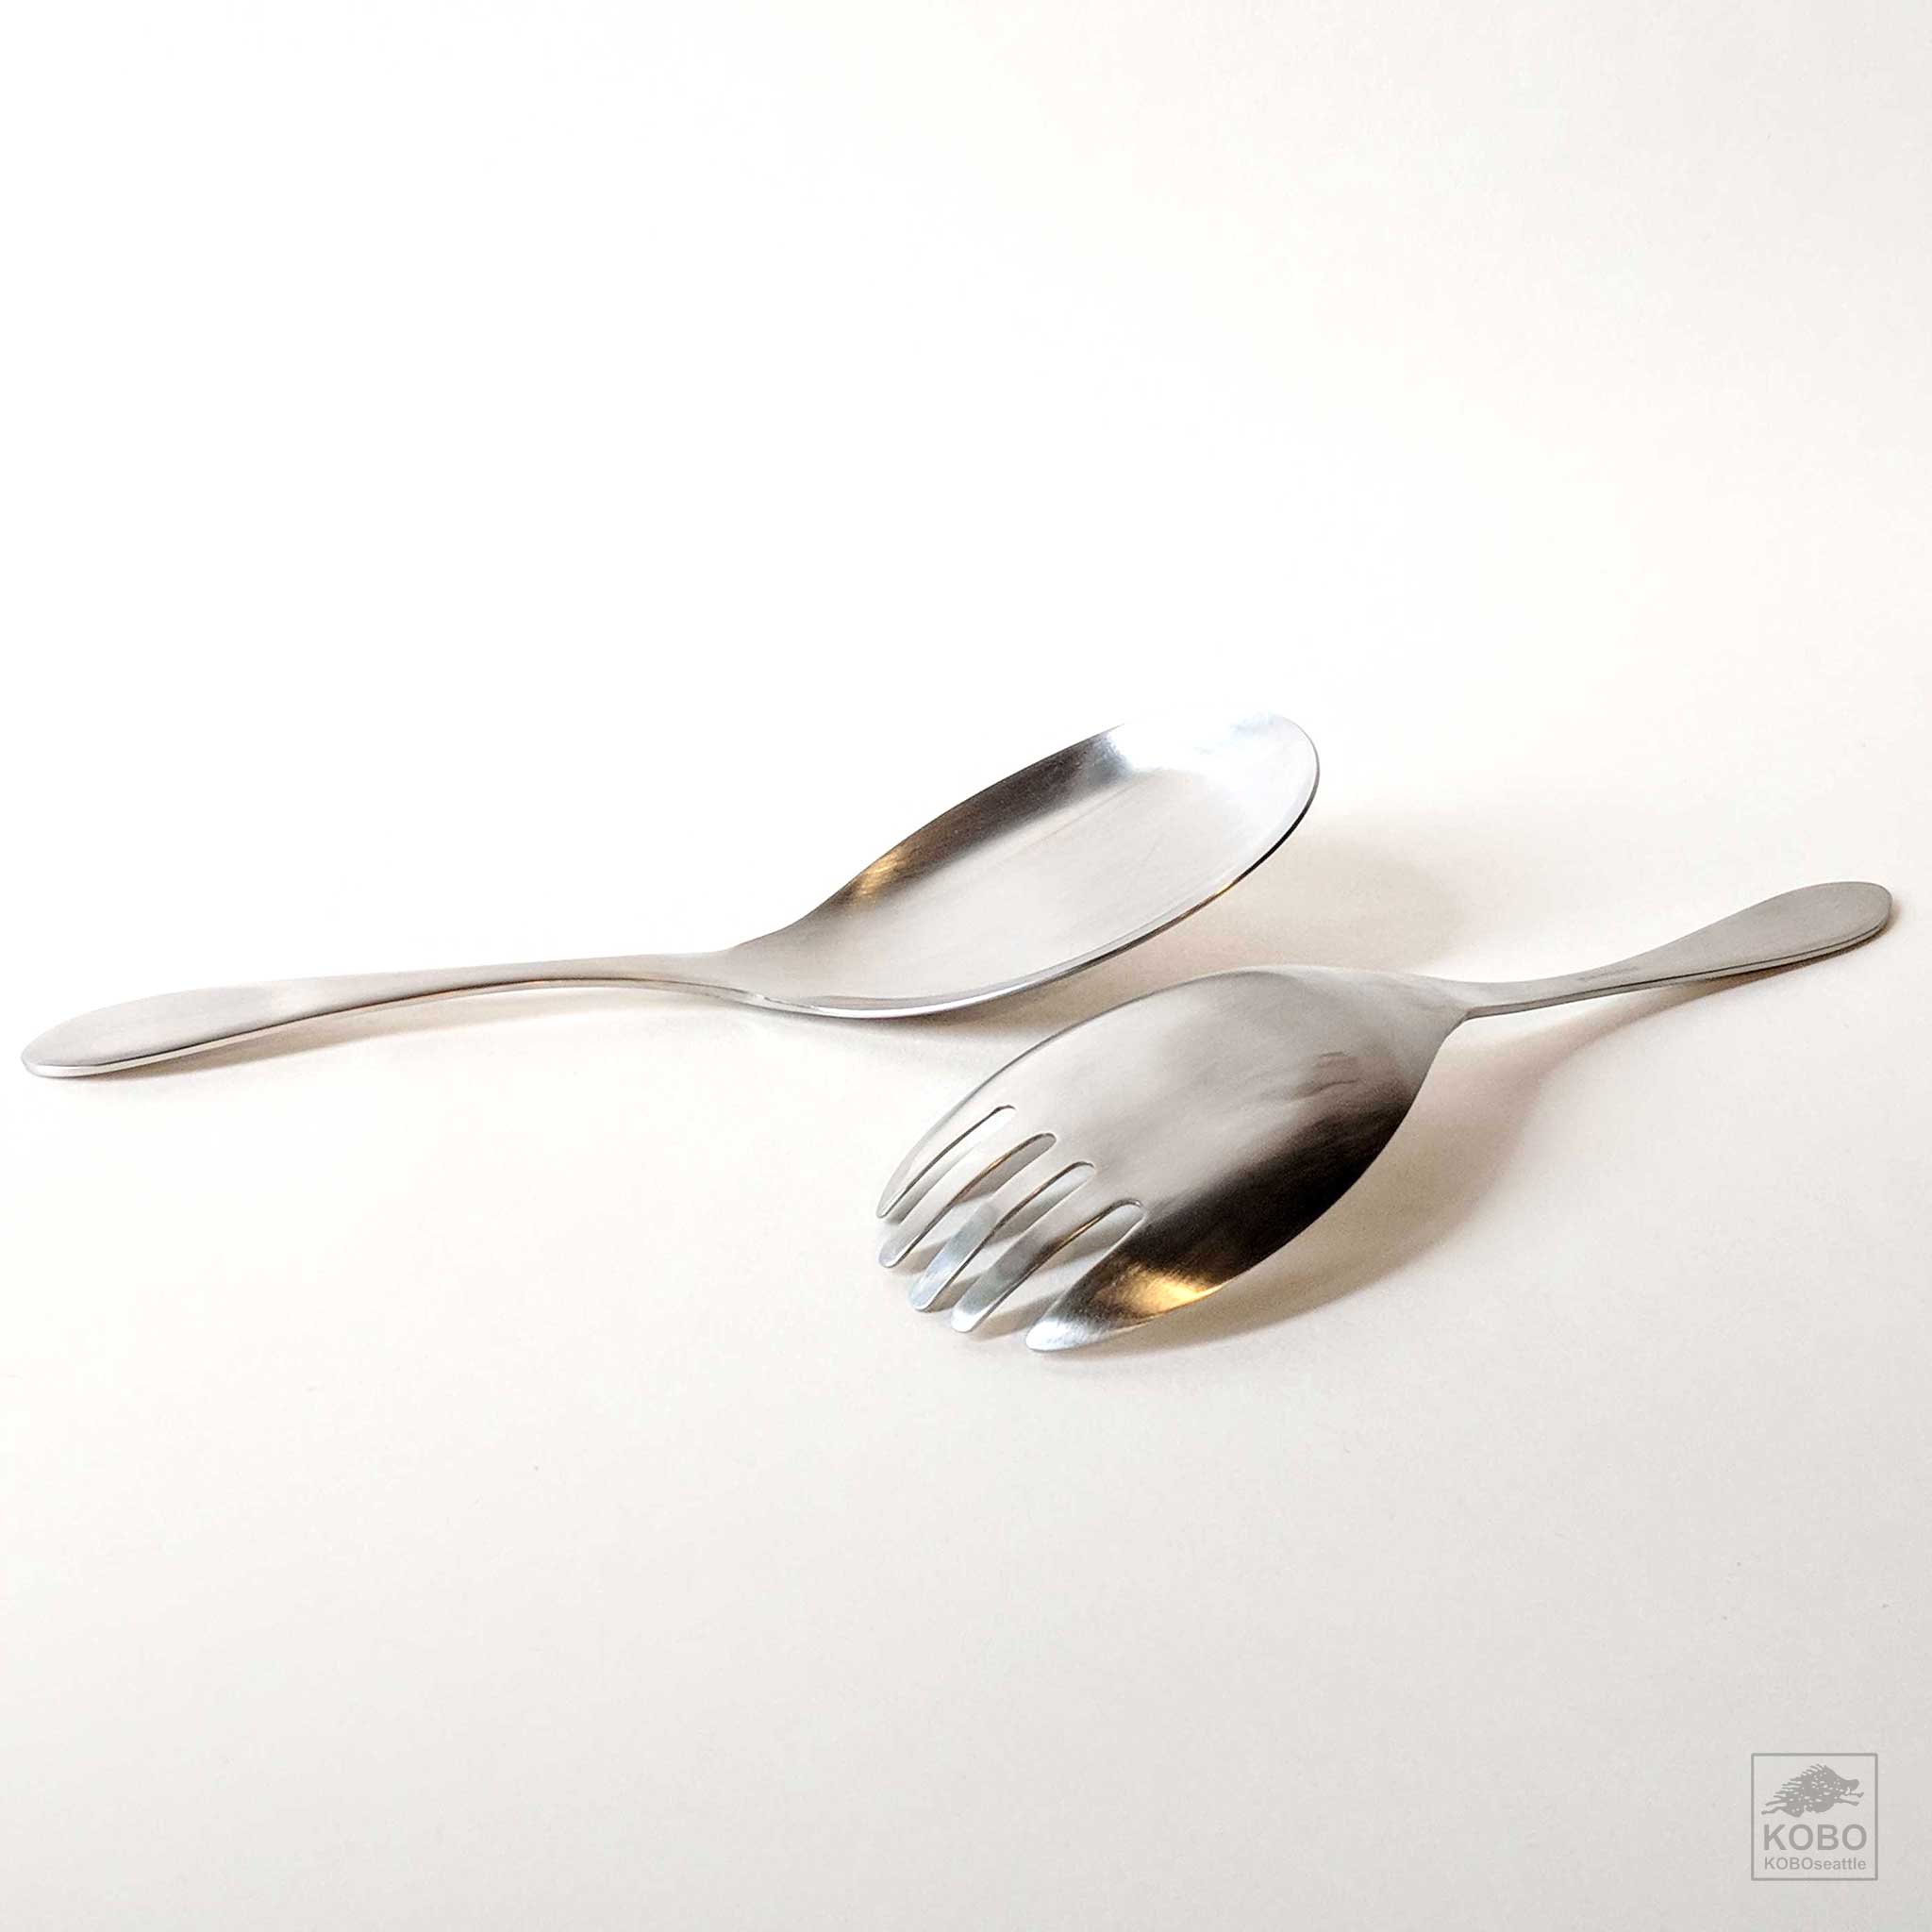 Stainless Steel Spoon Fork Set